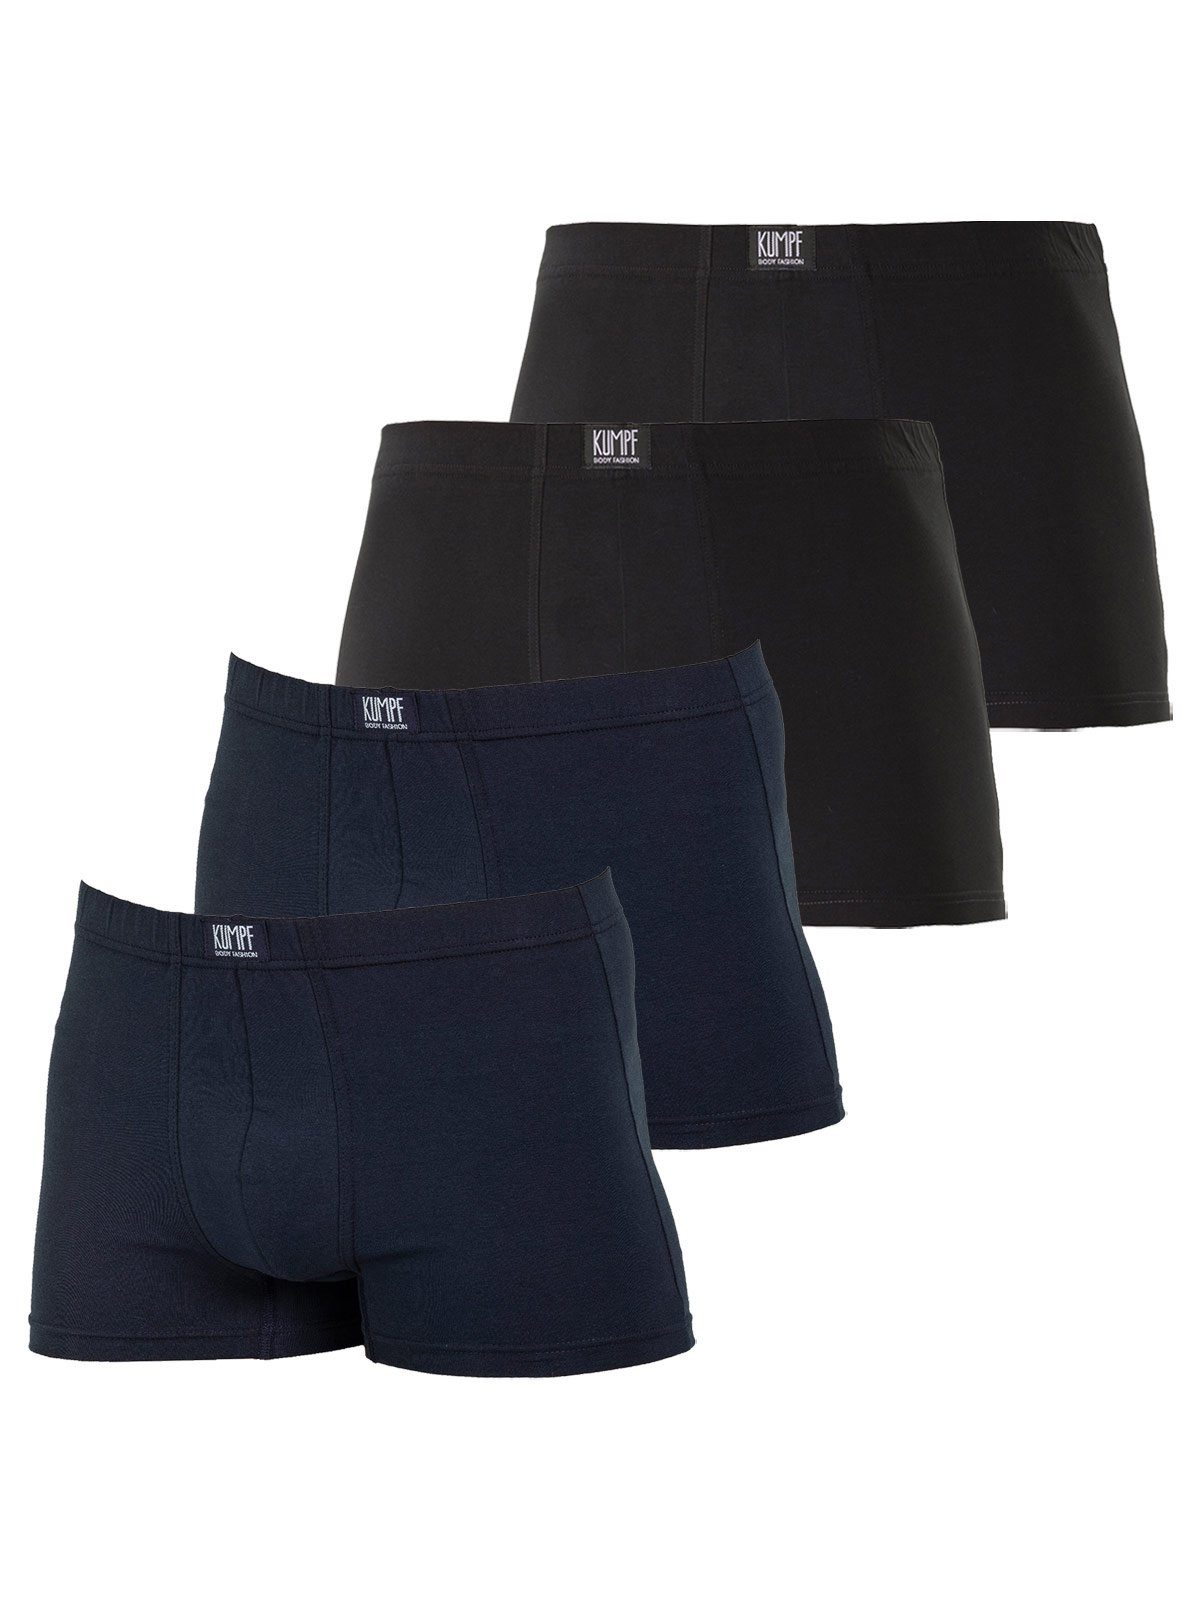 KUMPF Retro Pants 4er Sparpack 4-St) hohe schwarz (Spar-Set, navy Cotton Pants Herren Markenqualität Bio